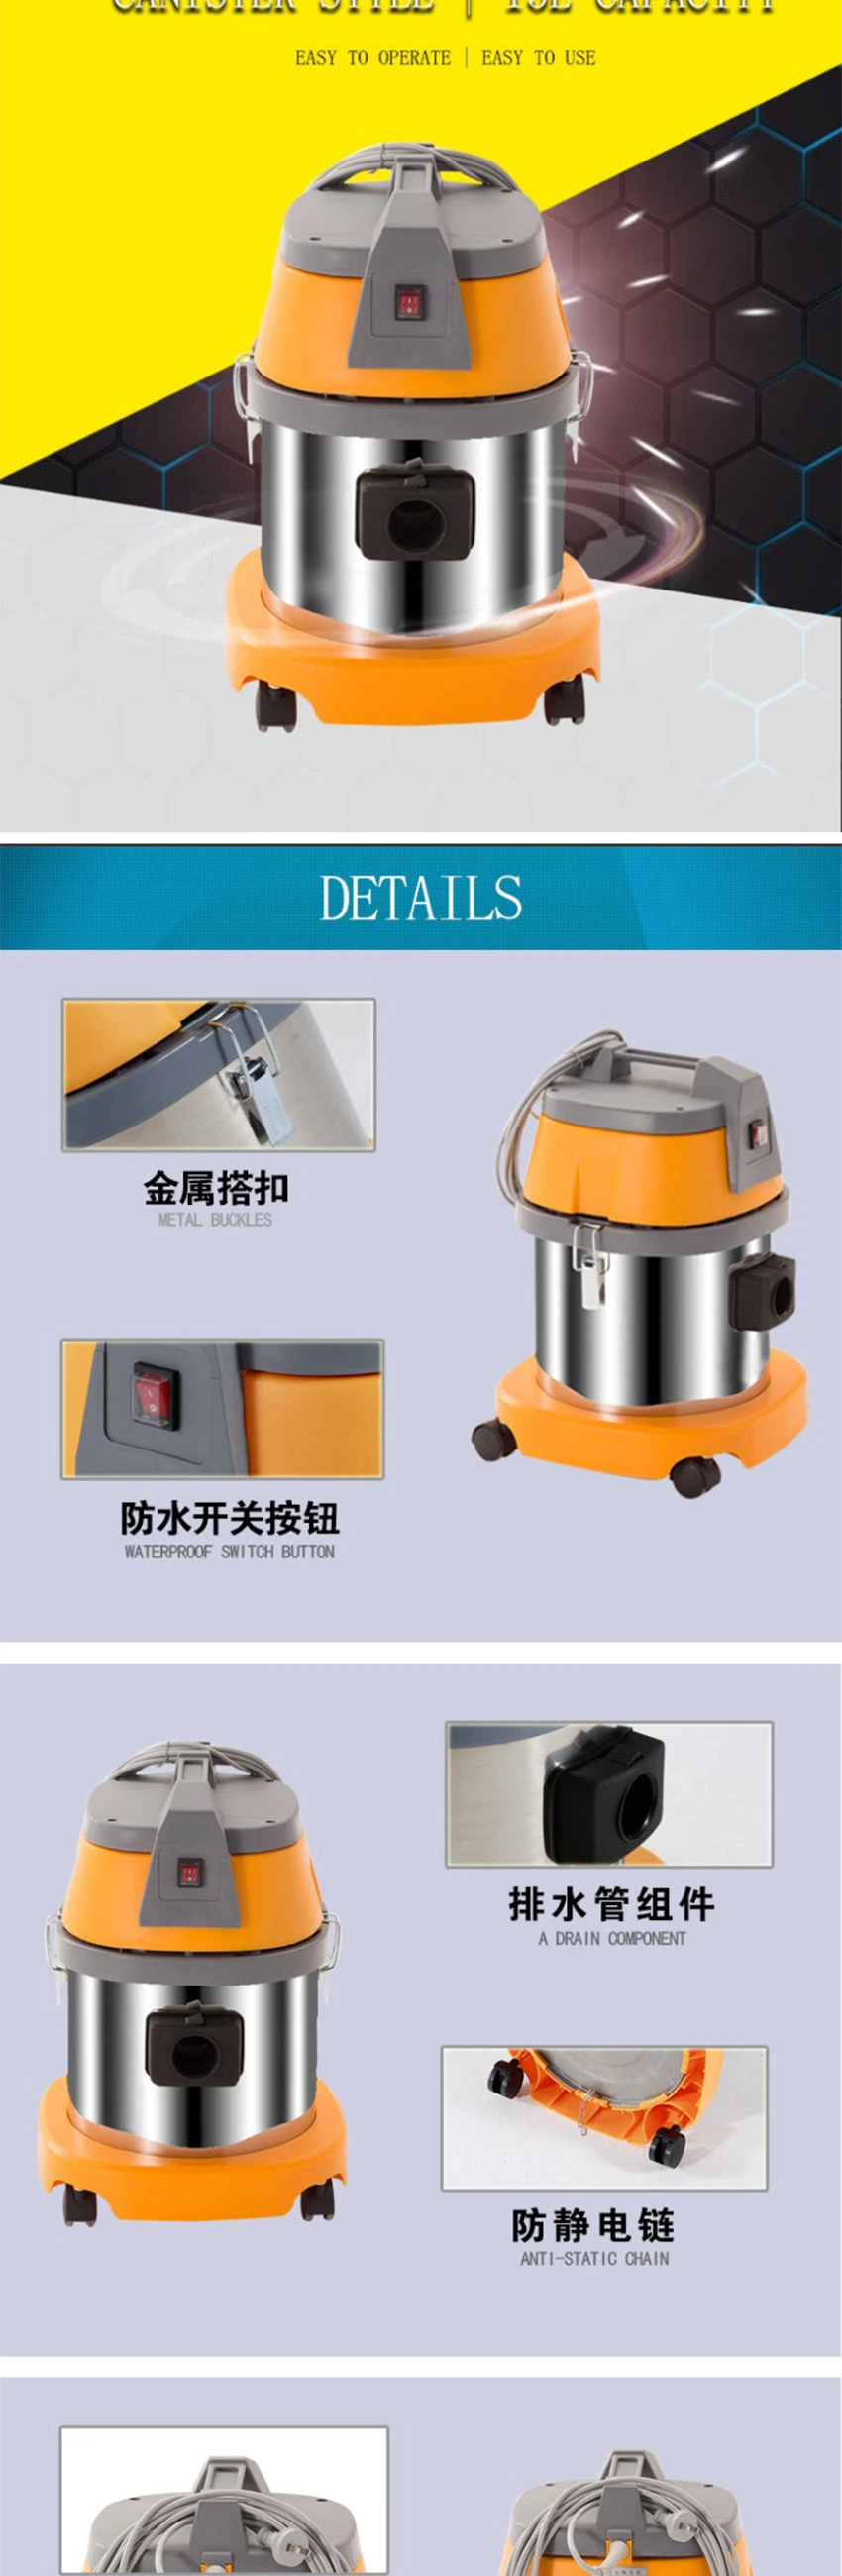 Industrial Vacuum Cleaner Small Powerful Factory Workshop Dry Wet Bucket Type Strong Vacuum Cleaner